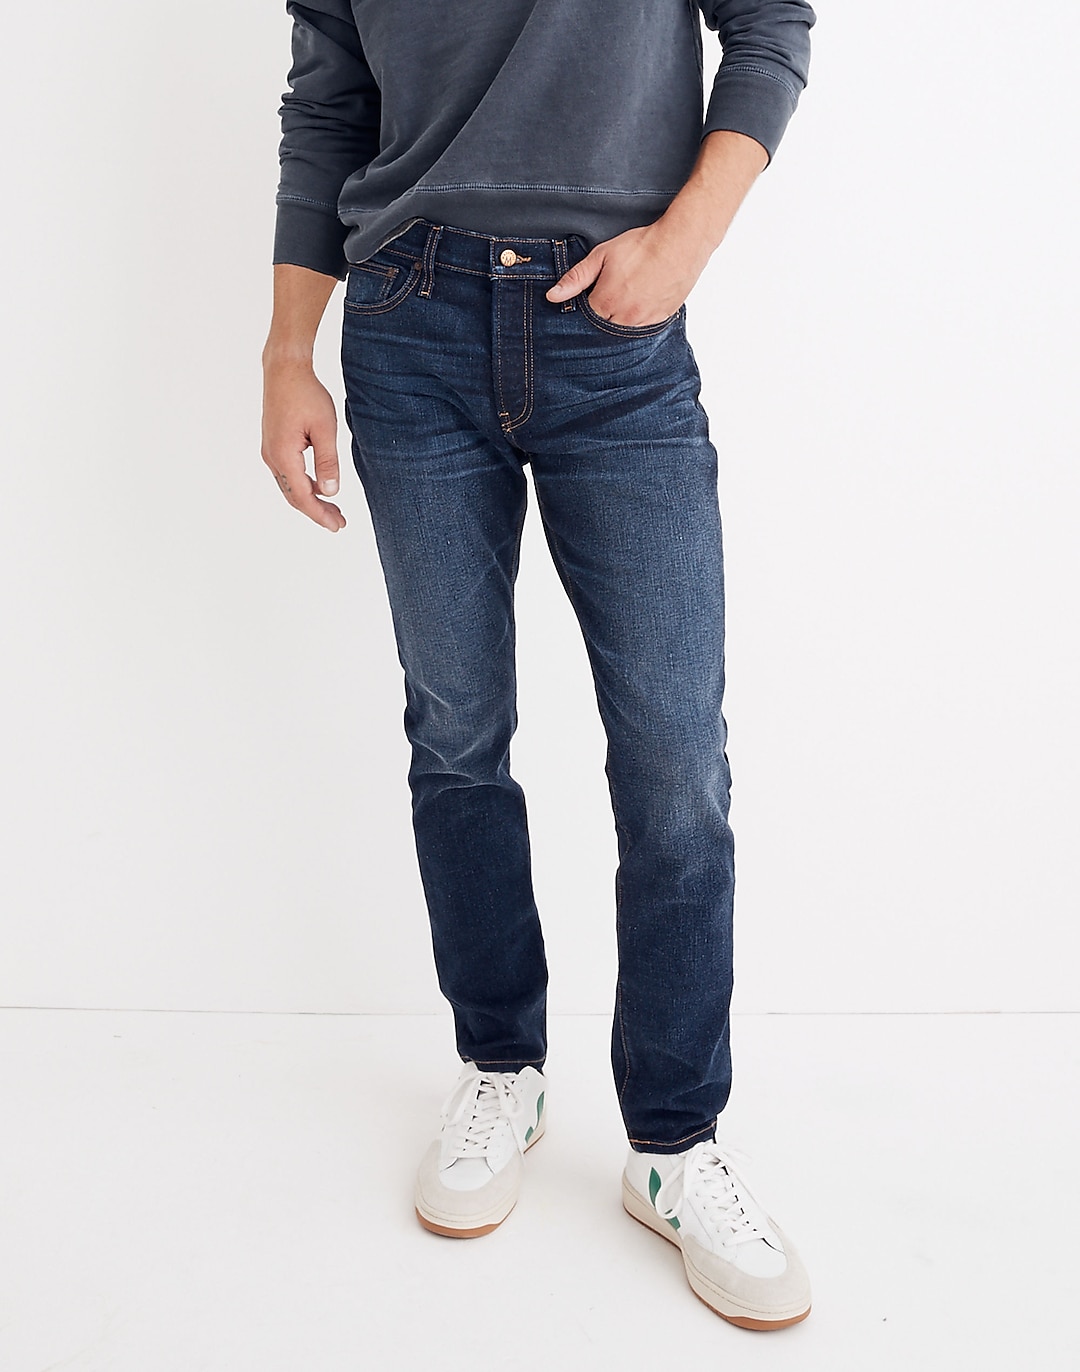 Men's Slim Authentic Flex Jeans in Baxley Wash